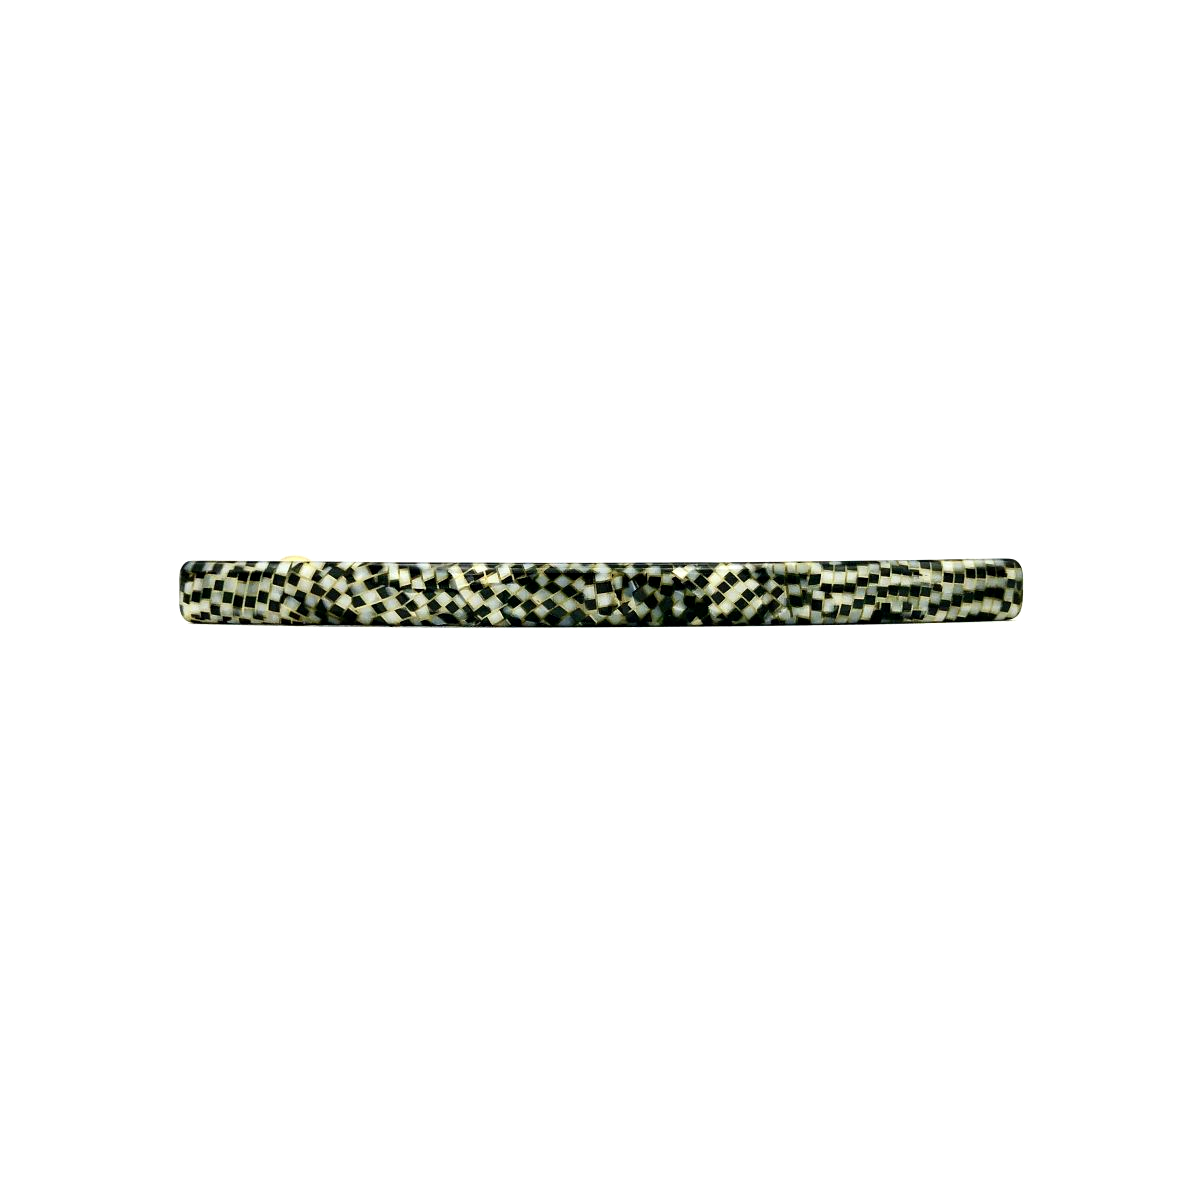 Haarspange silbergrau/schwarz - lang, flach - 10,3 cm